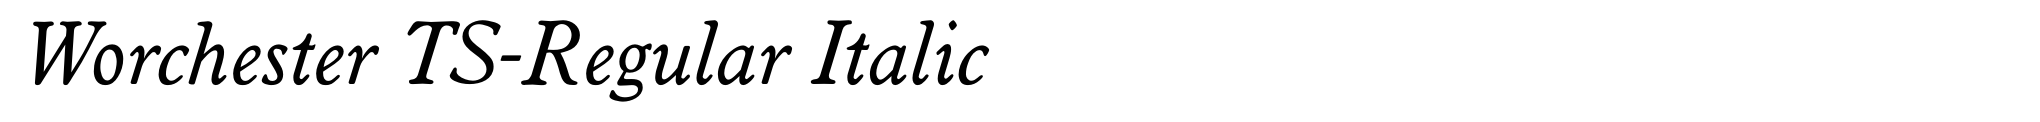 Worchester TS-Regular Italic image